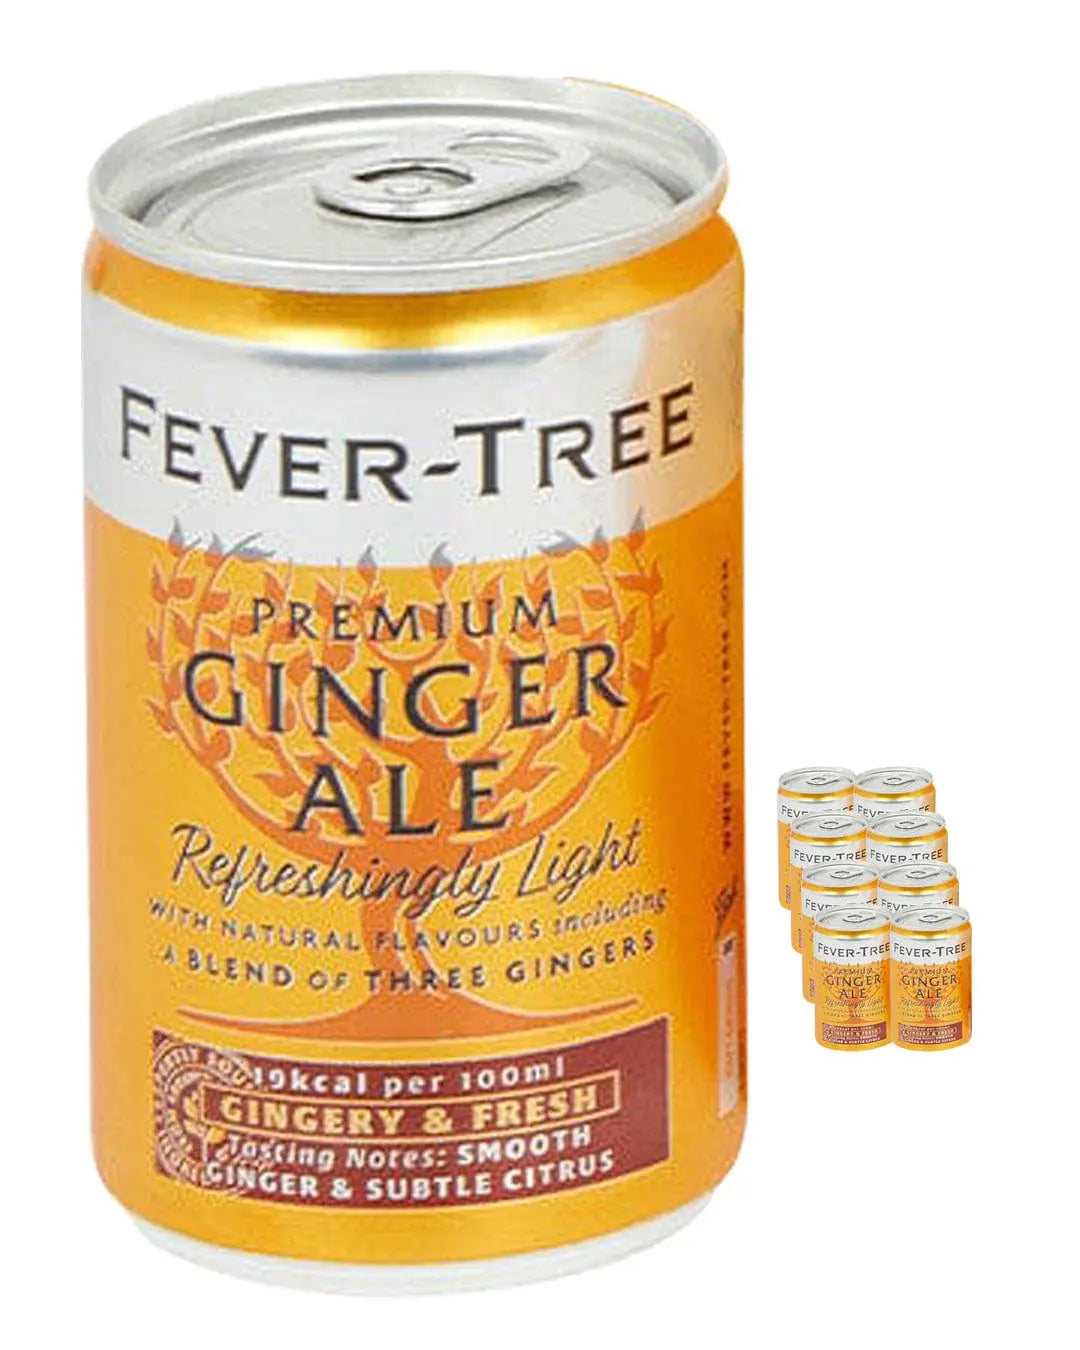 Fever-Tree Refreshingly Light Ginger Ale Fridge Pack, 8 x 150 ml  31 DEC 22 Soft Drinks & Mixers 05060605060026